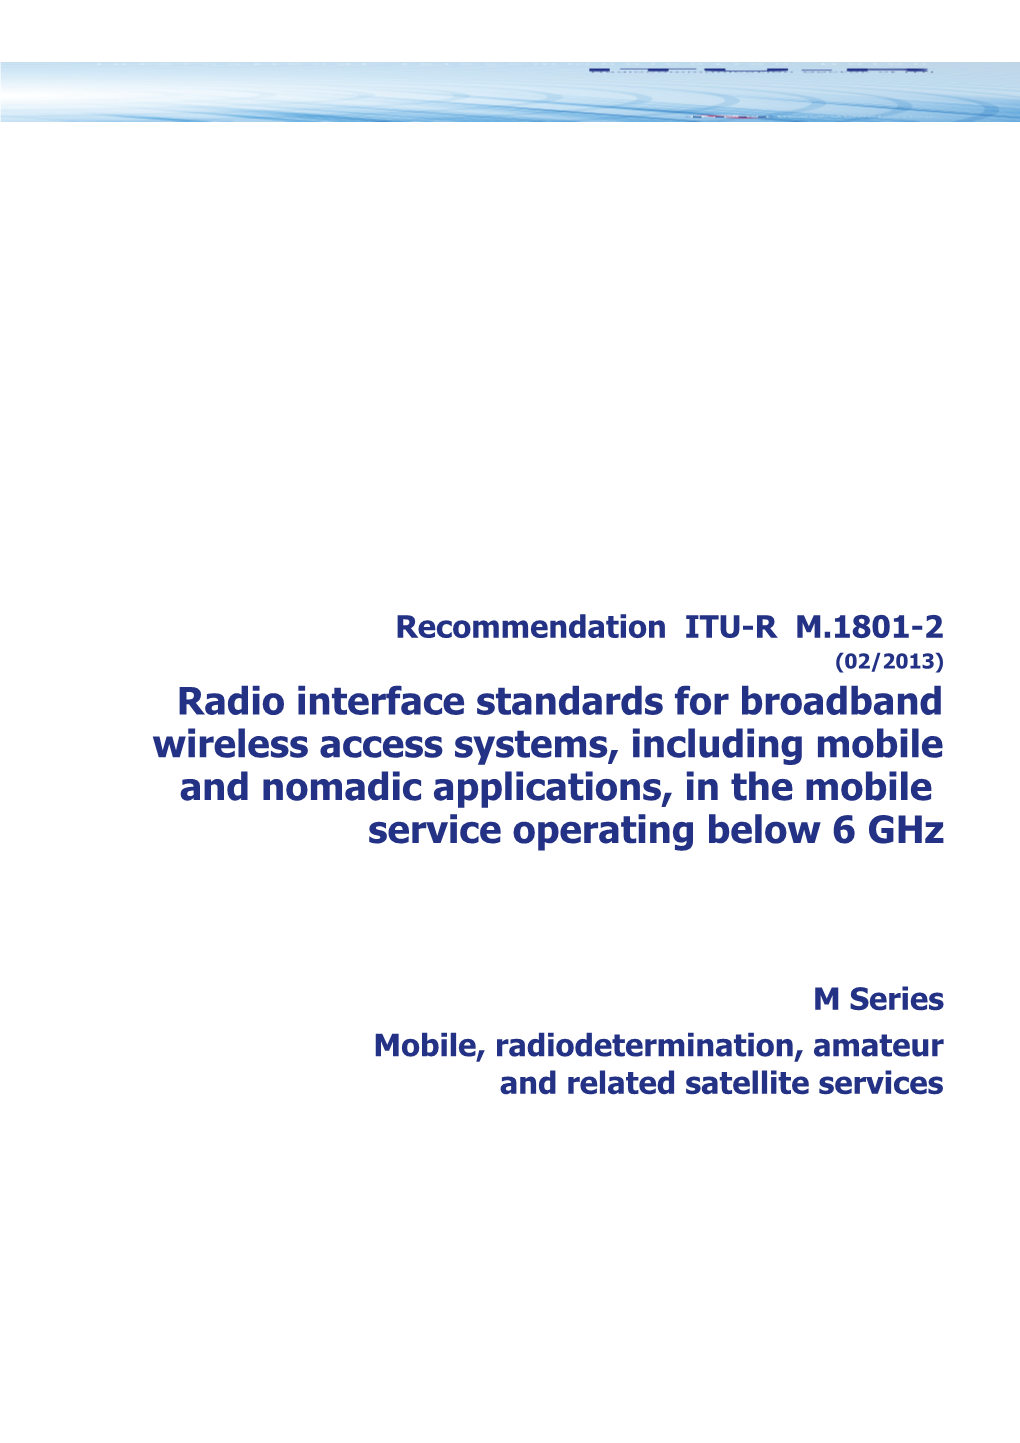 RECOMMENDATION ITU-R M.1801-2* - Radio Interface Standards for Broadband Wireless Access